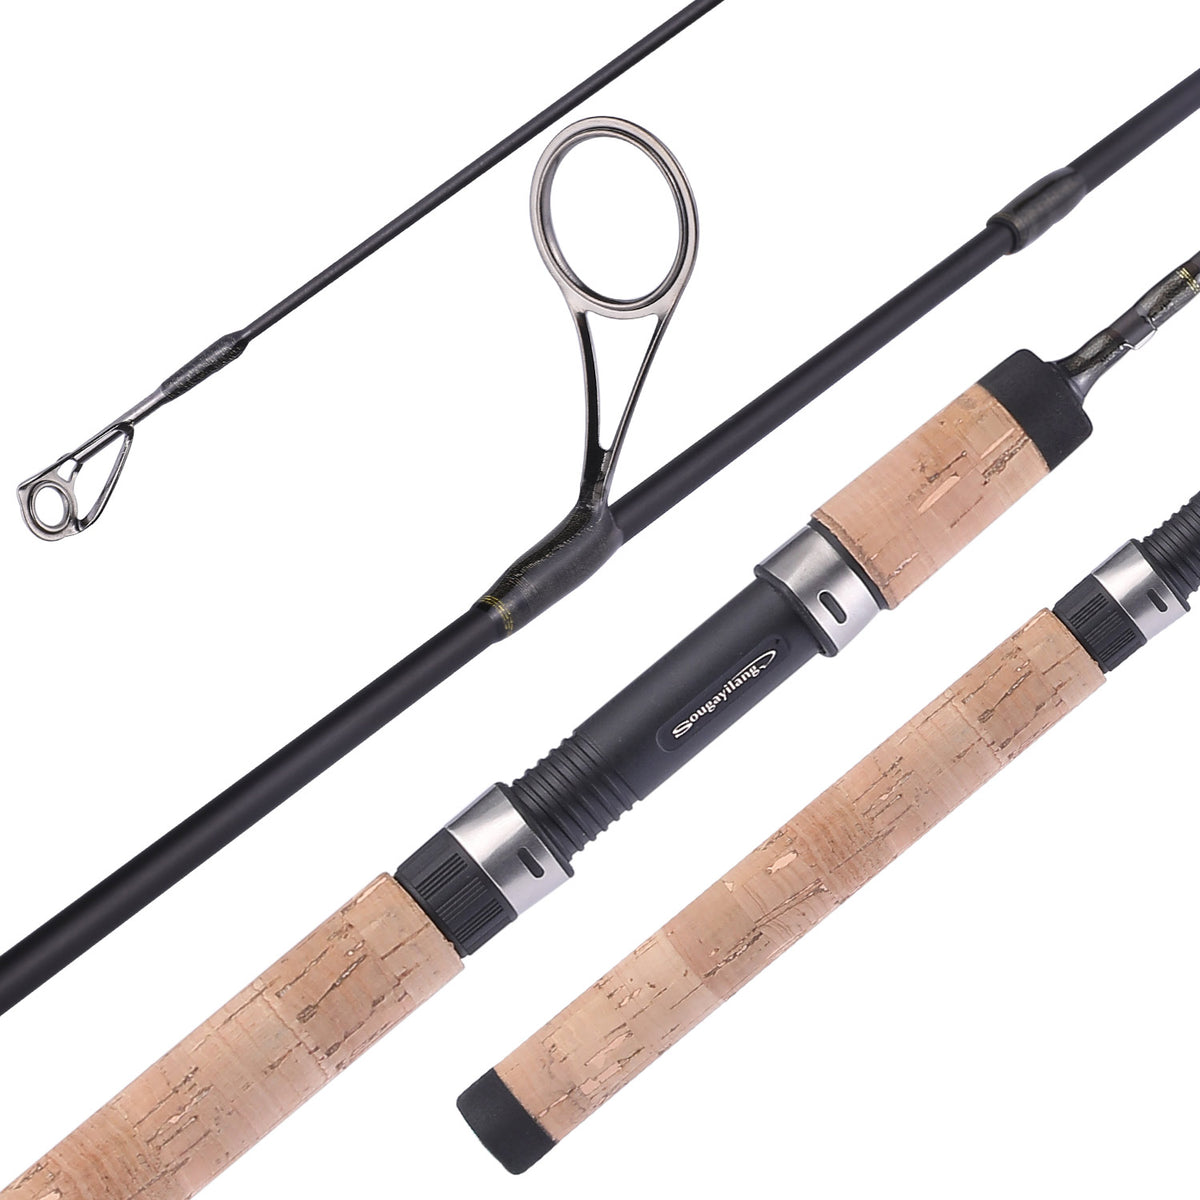 61cm Ultra-Short Fishing Rod and Reel Set, 74g Ultra-Light